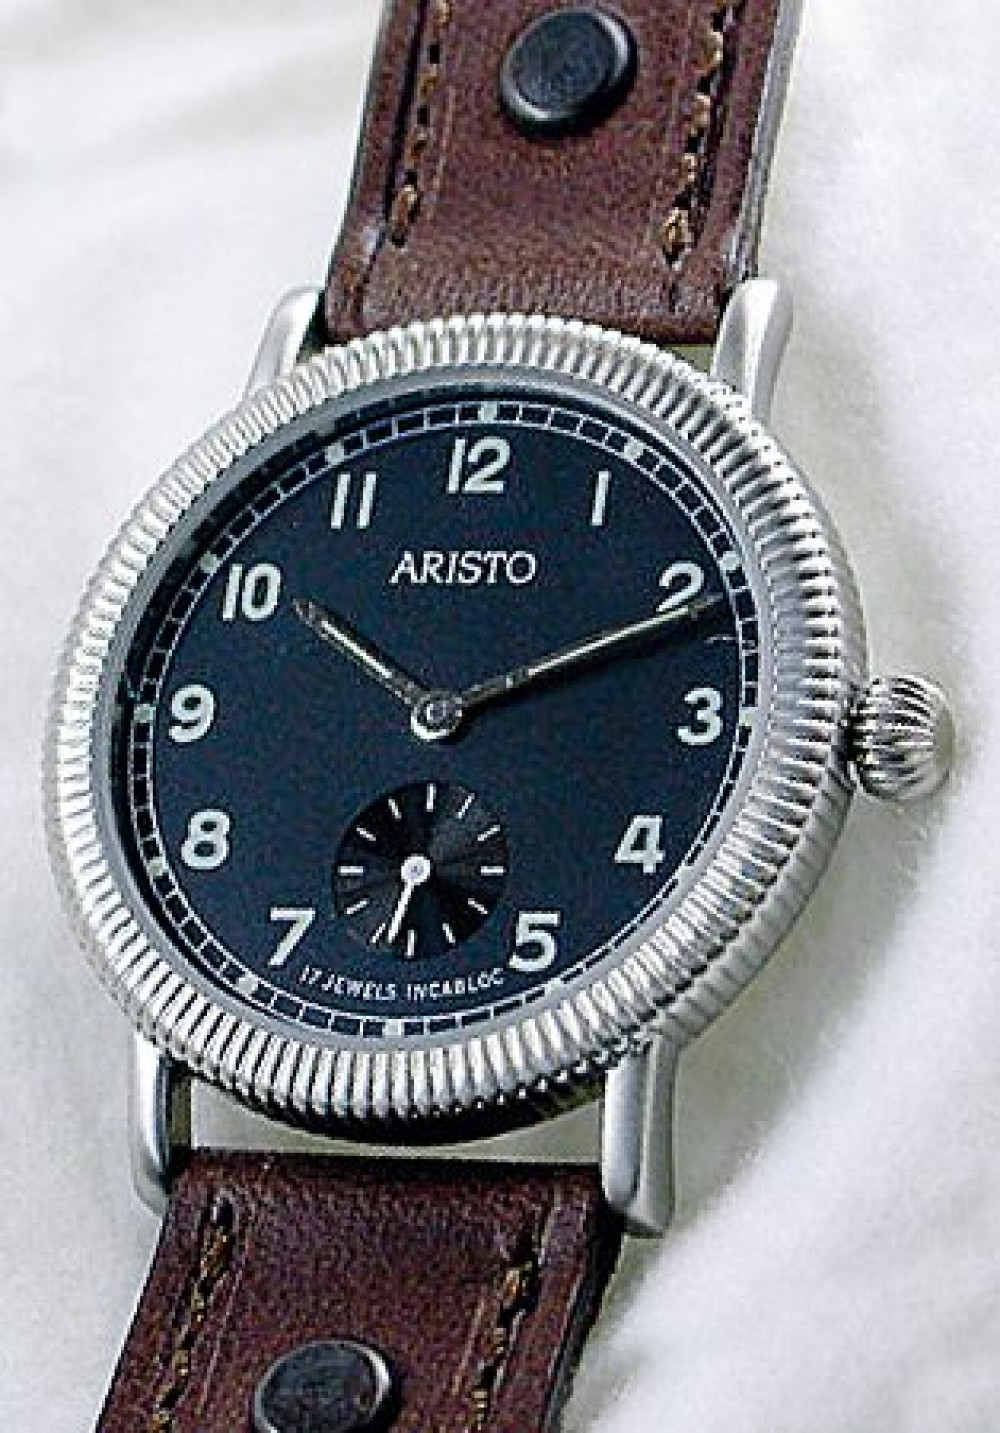 Zegarek firmy Aristo, model 7001 Flieger